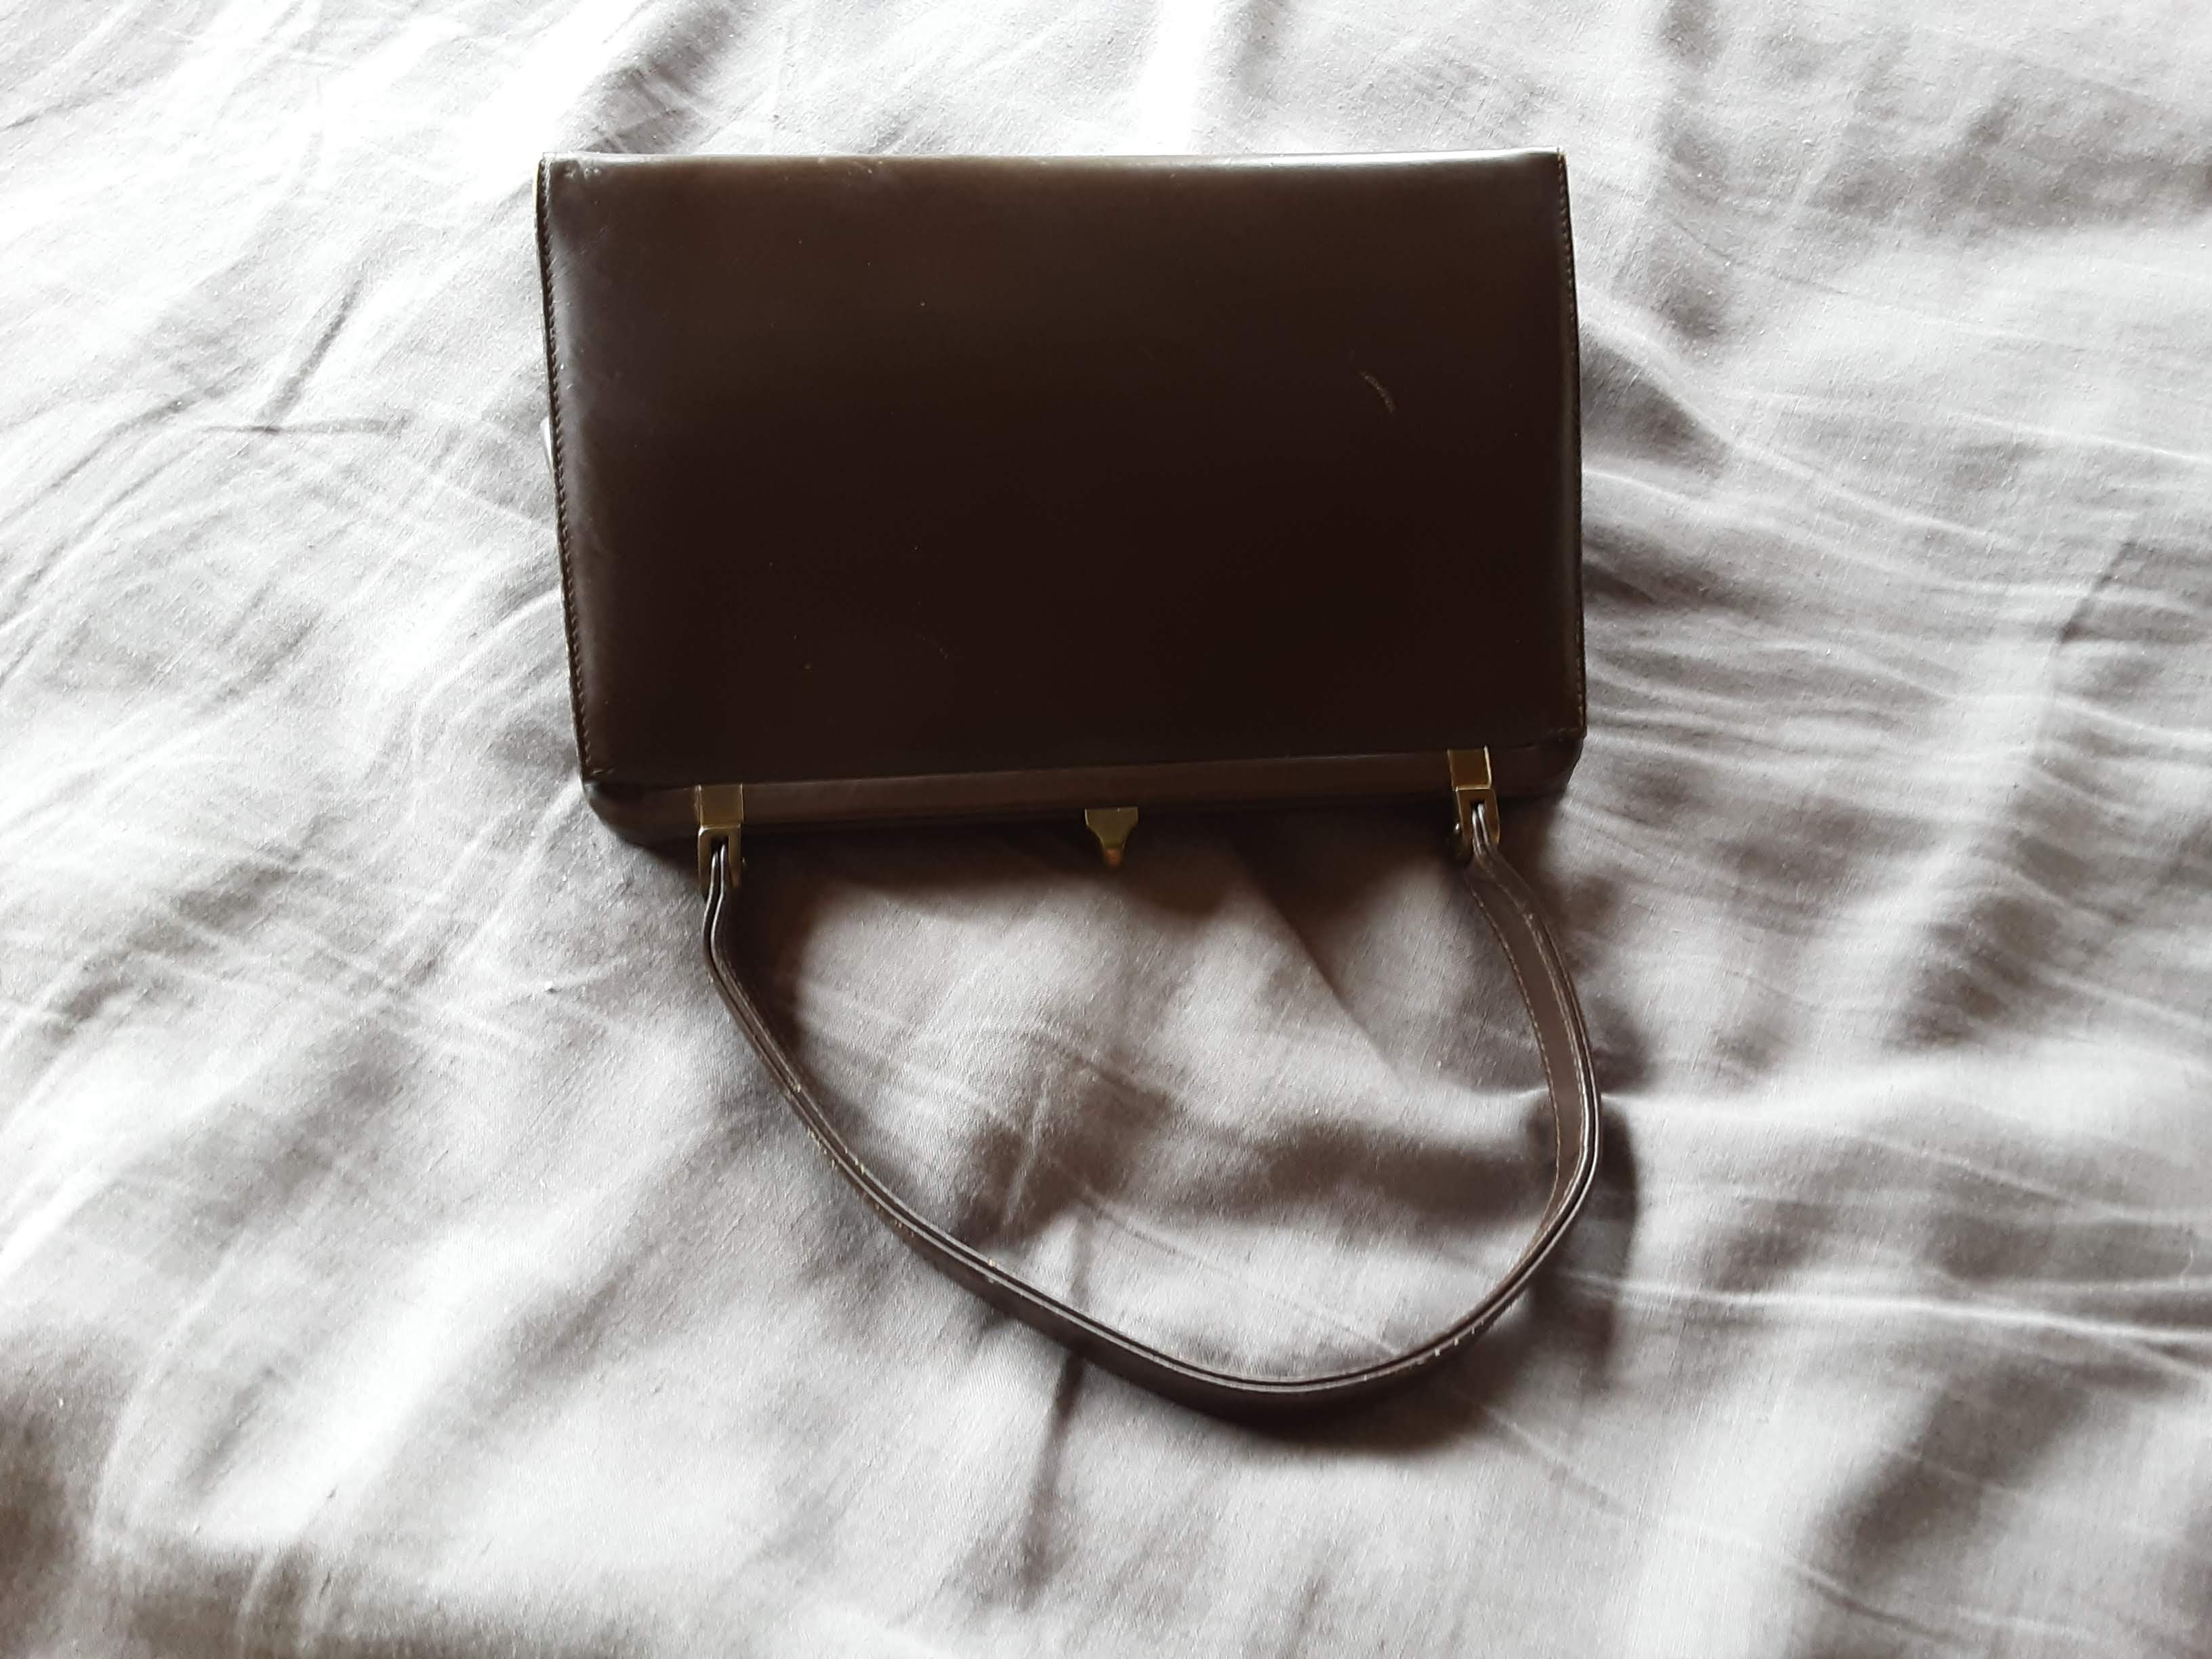 Antique leather handbag